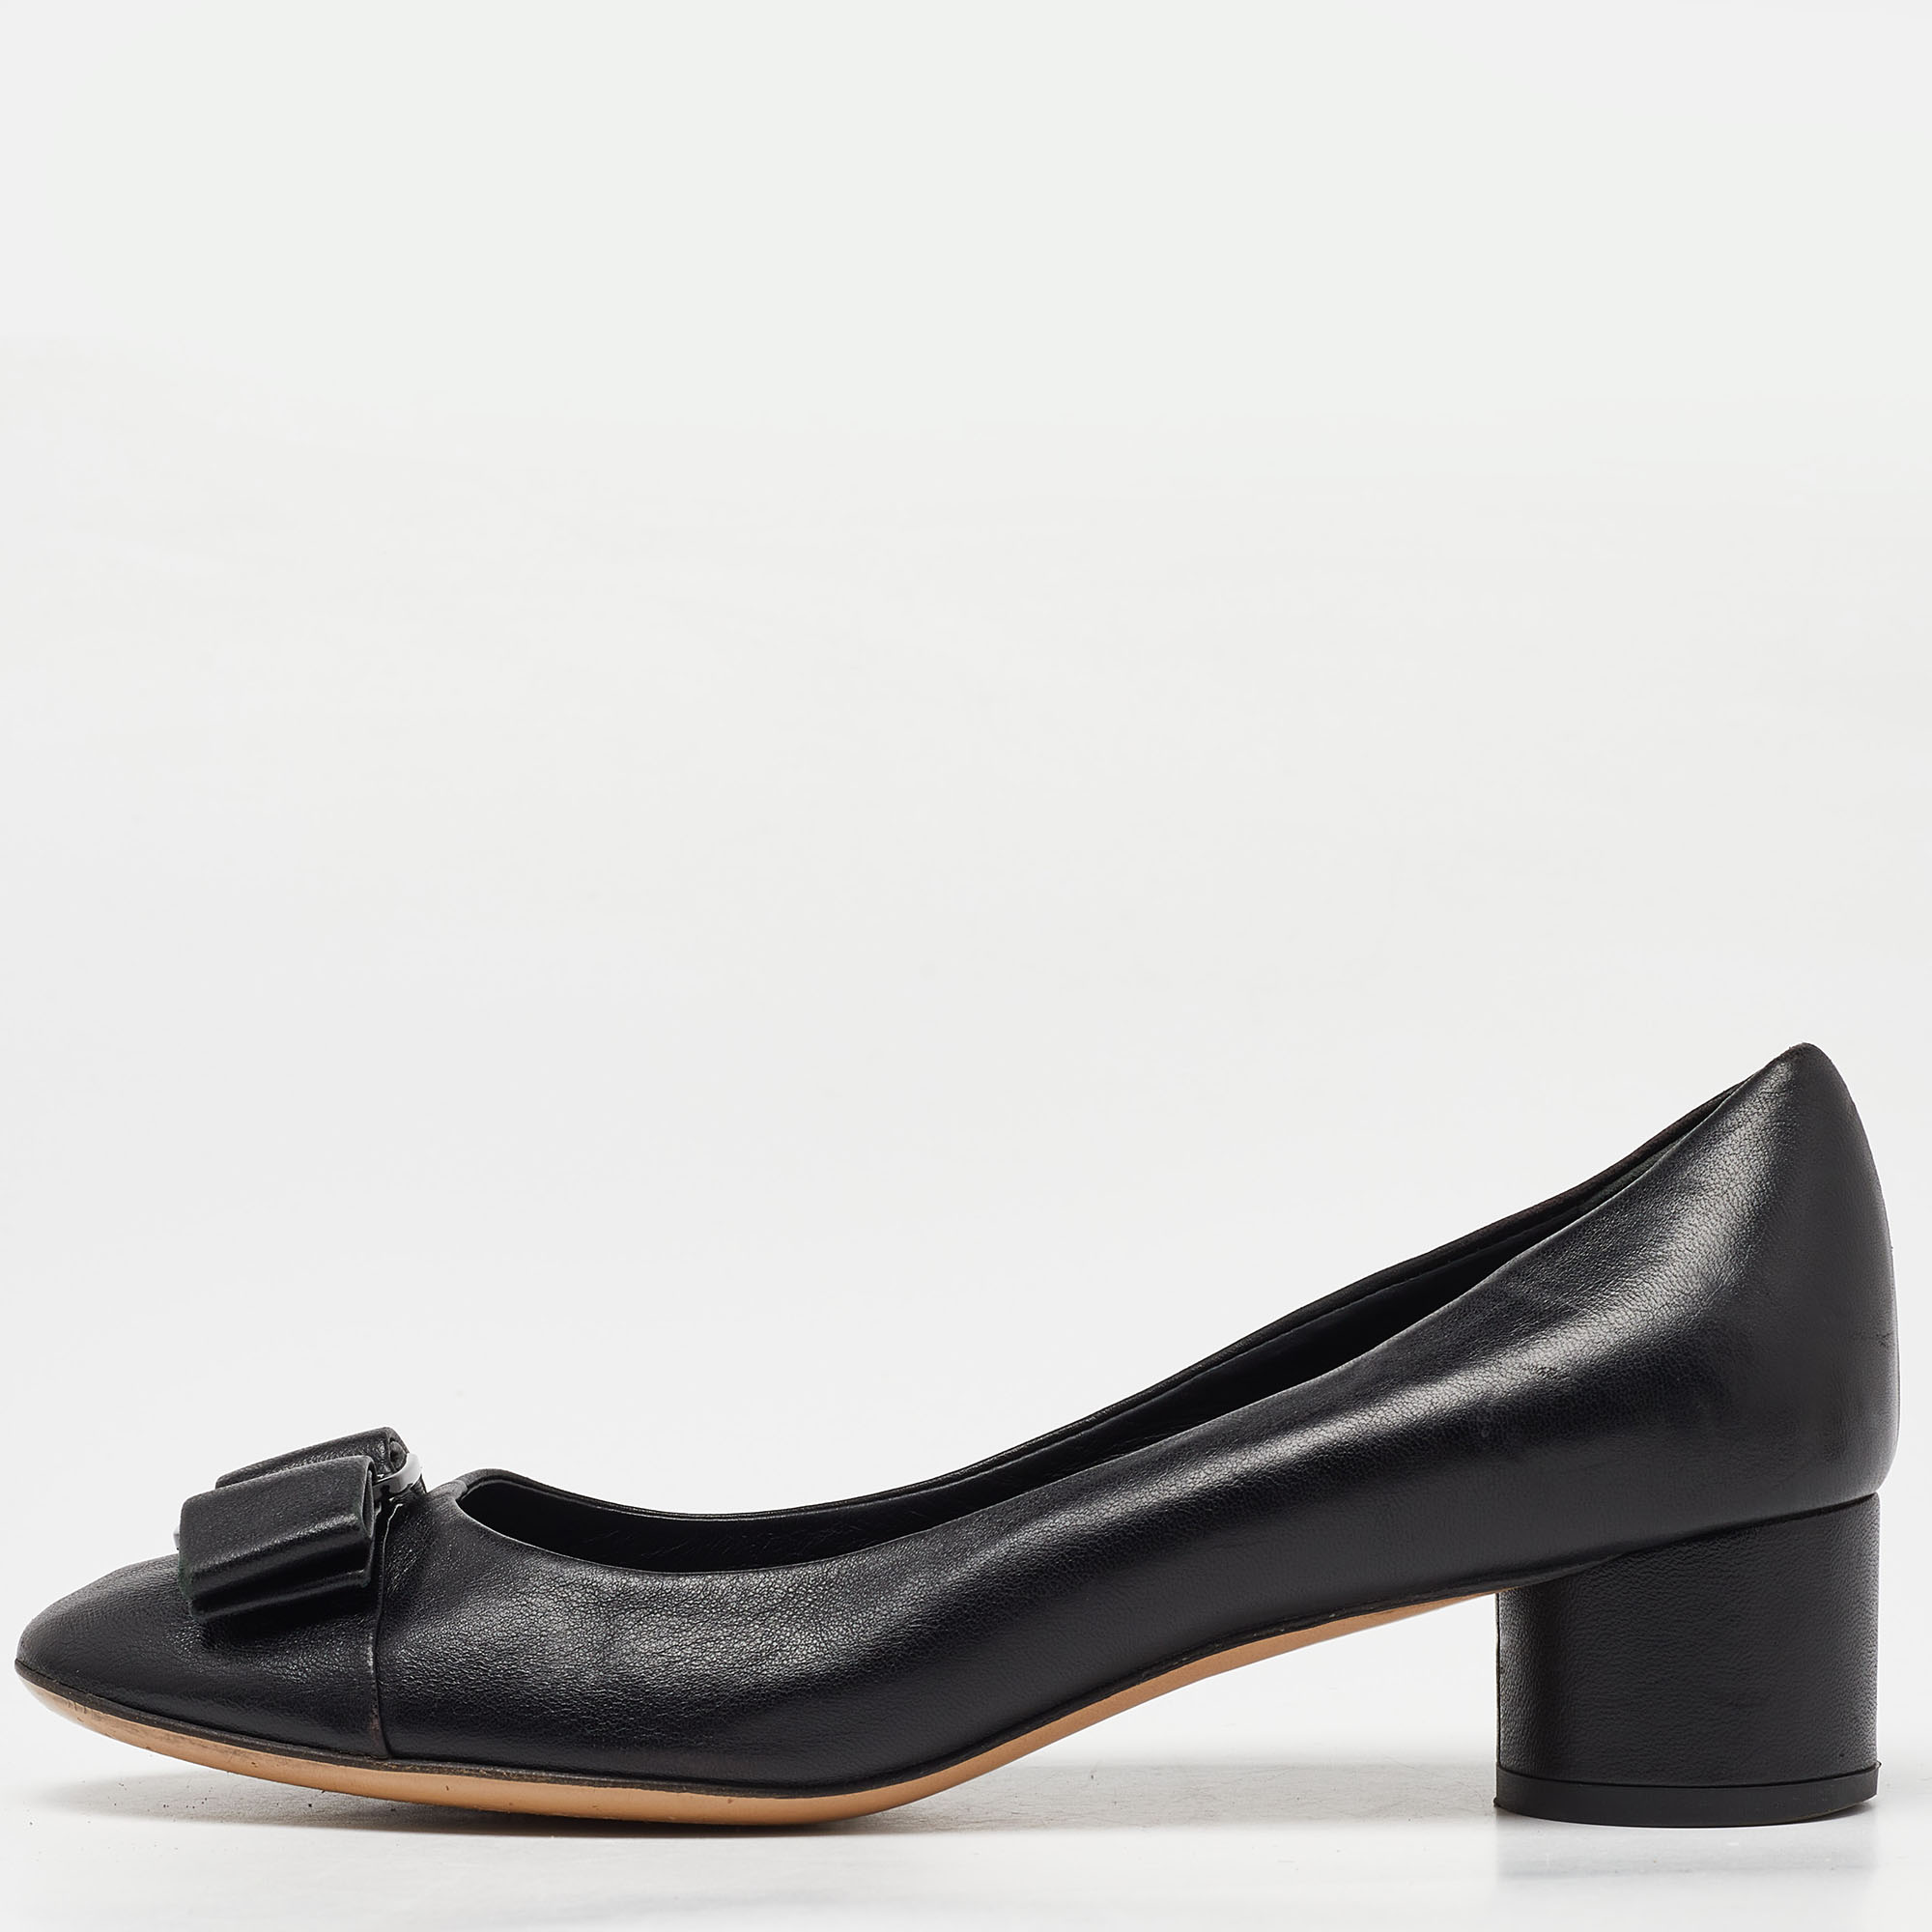 Salvatore ferragamo black leather vara bow block heel pumps size 37